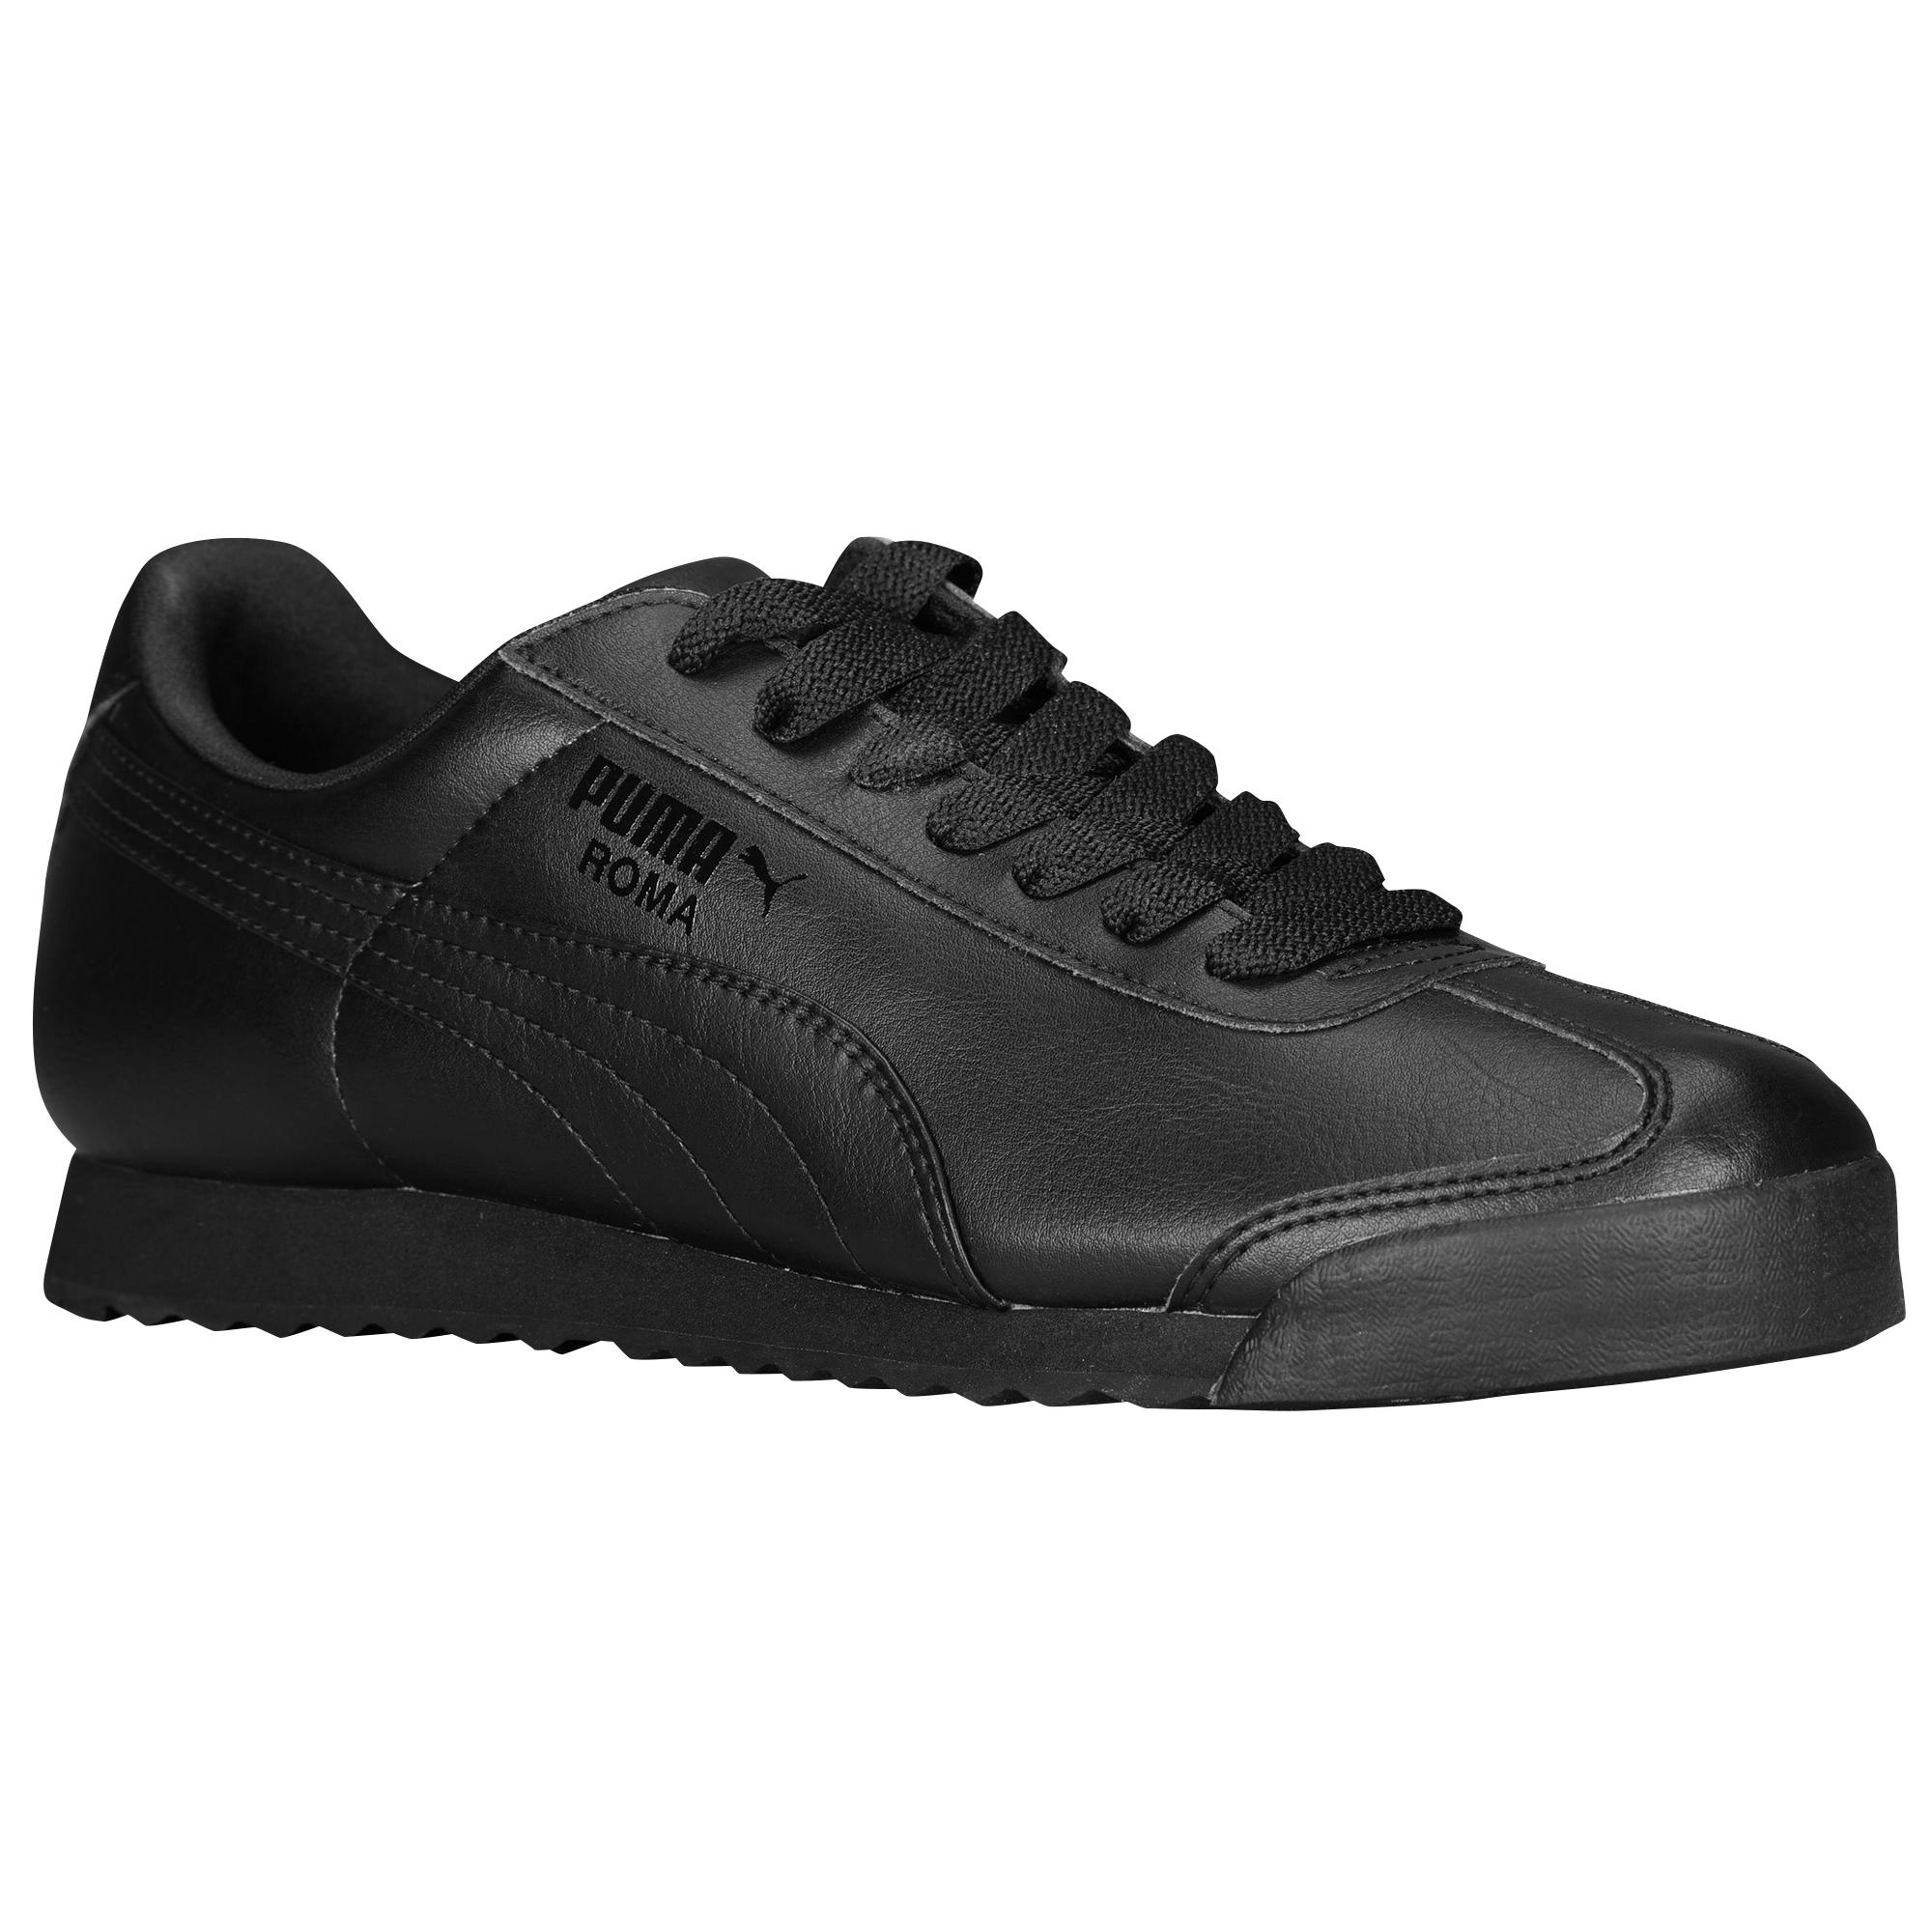 PUMA Leather Roma Basic Casual Training Shoes in Black/Black (Black ...